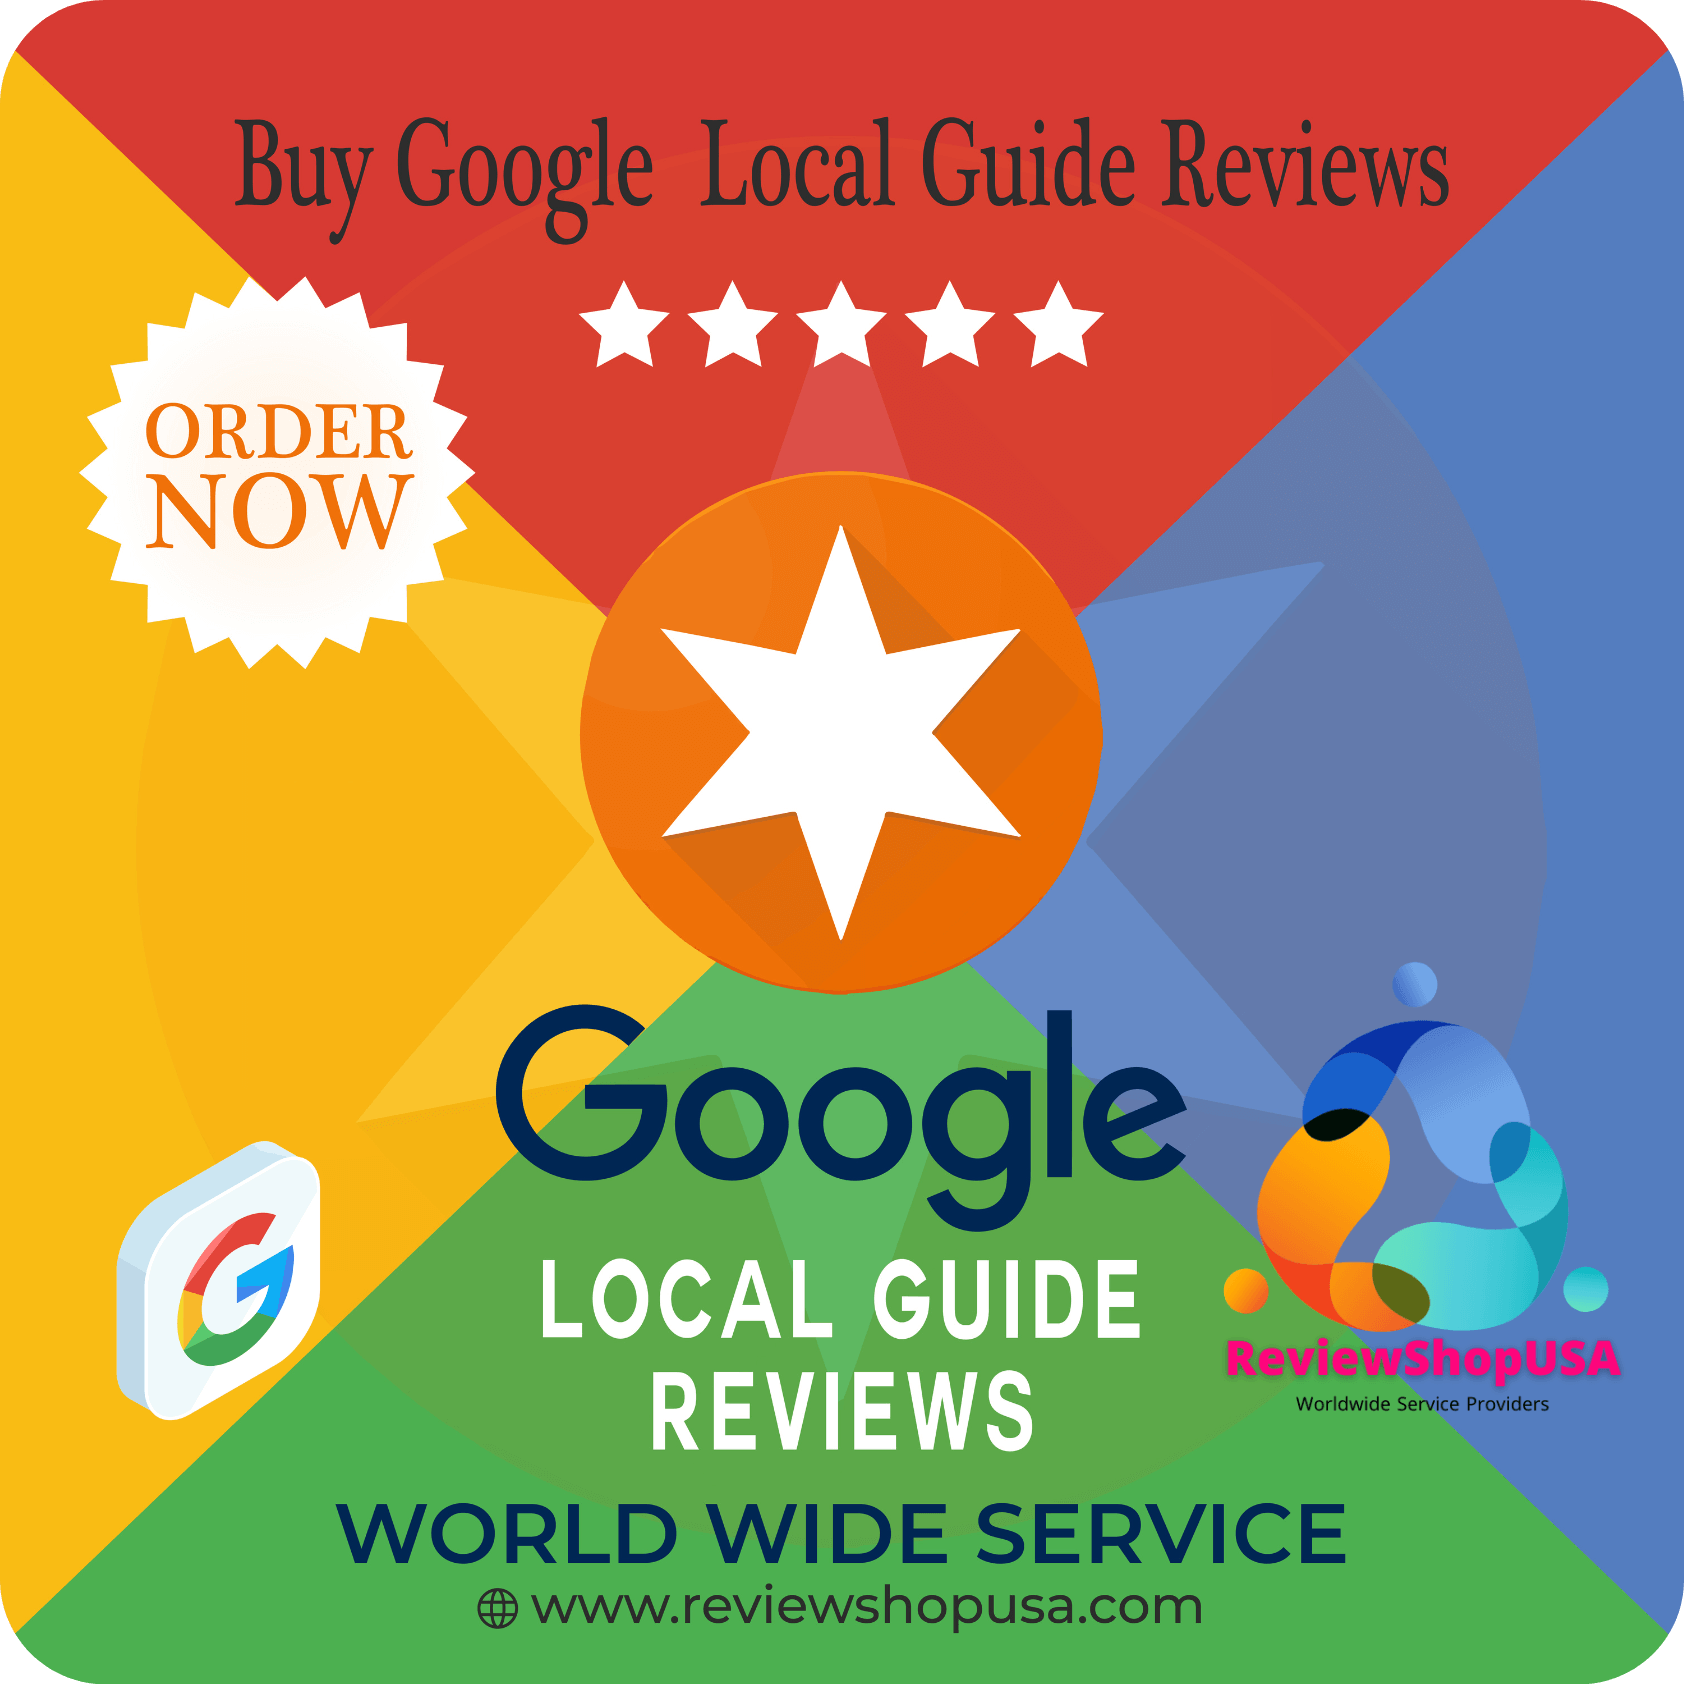 Buy Google Local Guide Reviews - 100% Local Guide Reviews...